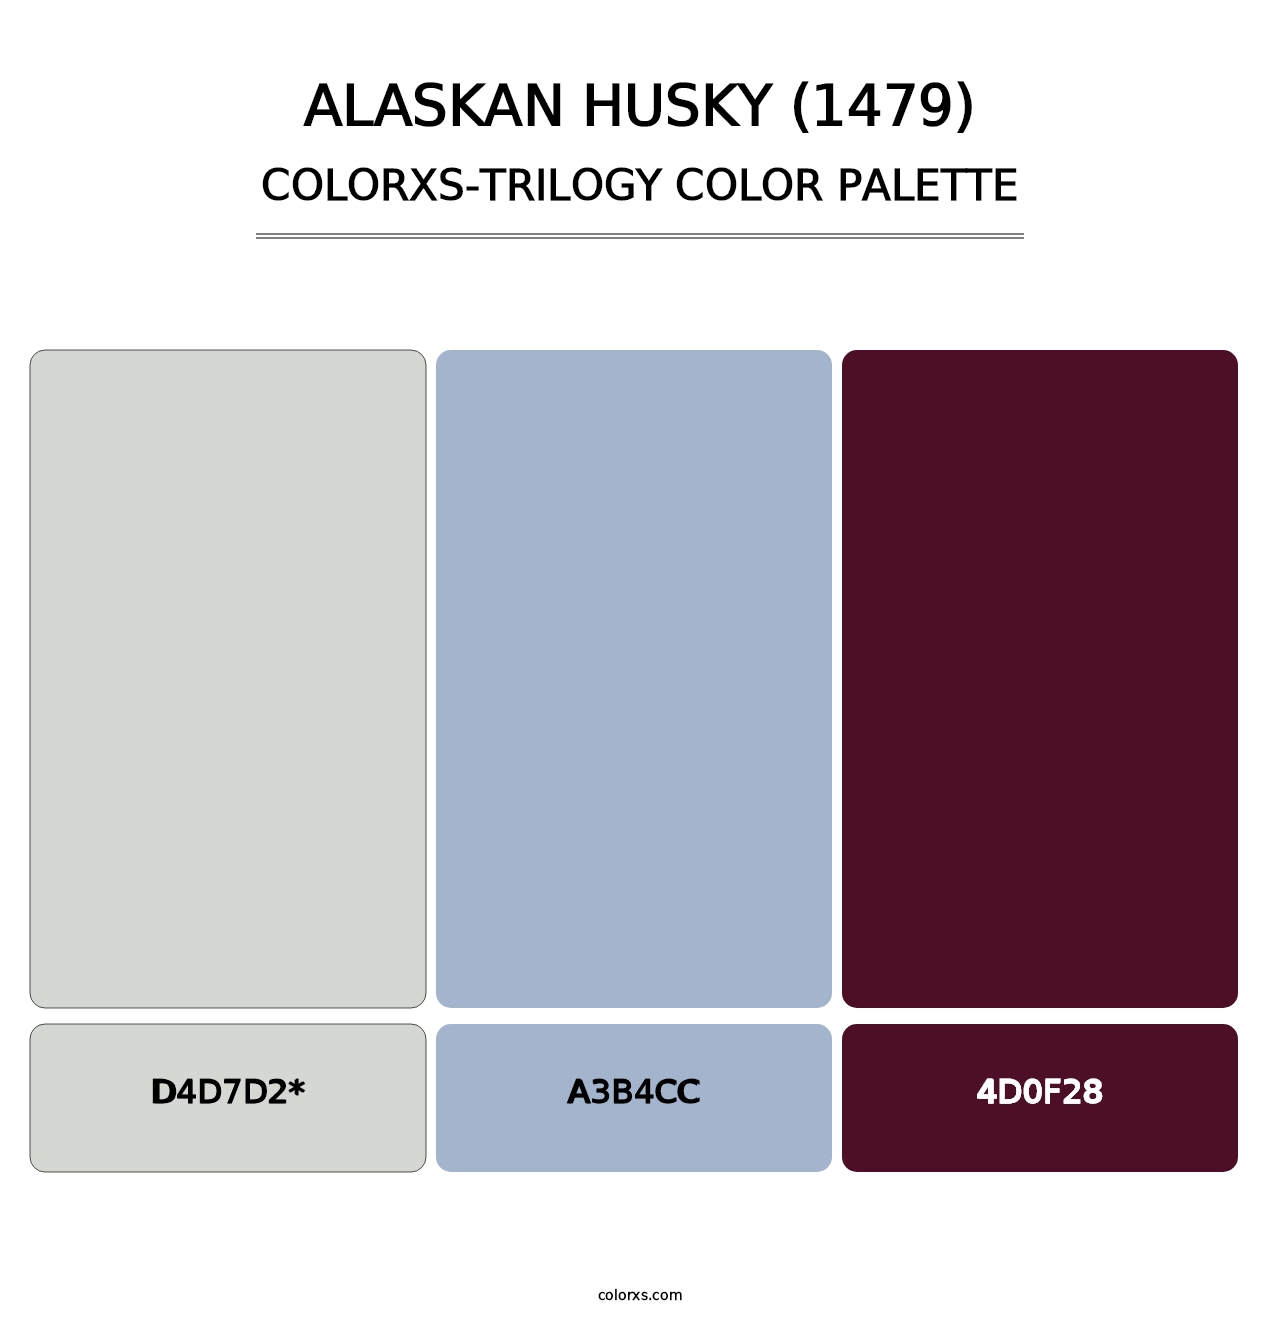 Alaskan Husky (1479) - Colorxs Trilogy Palette